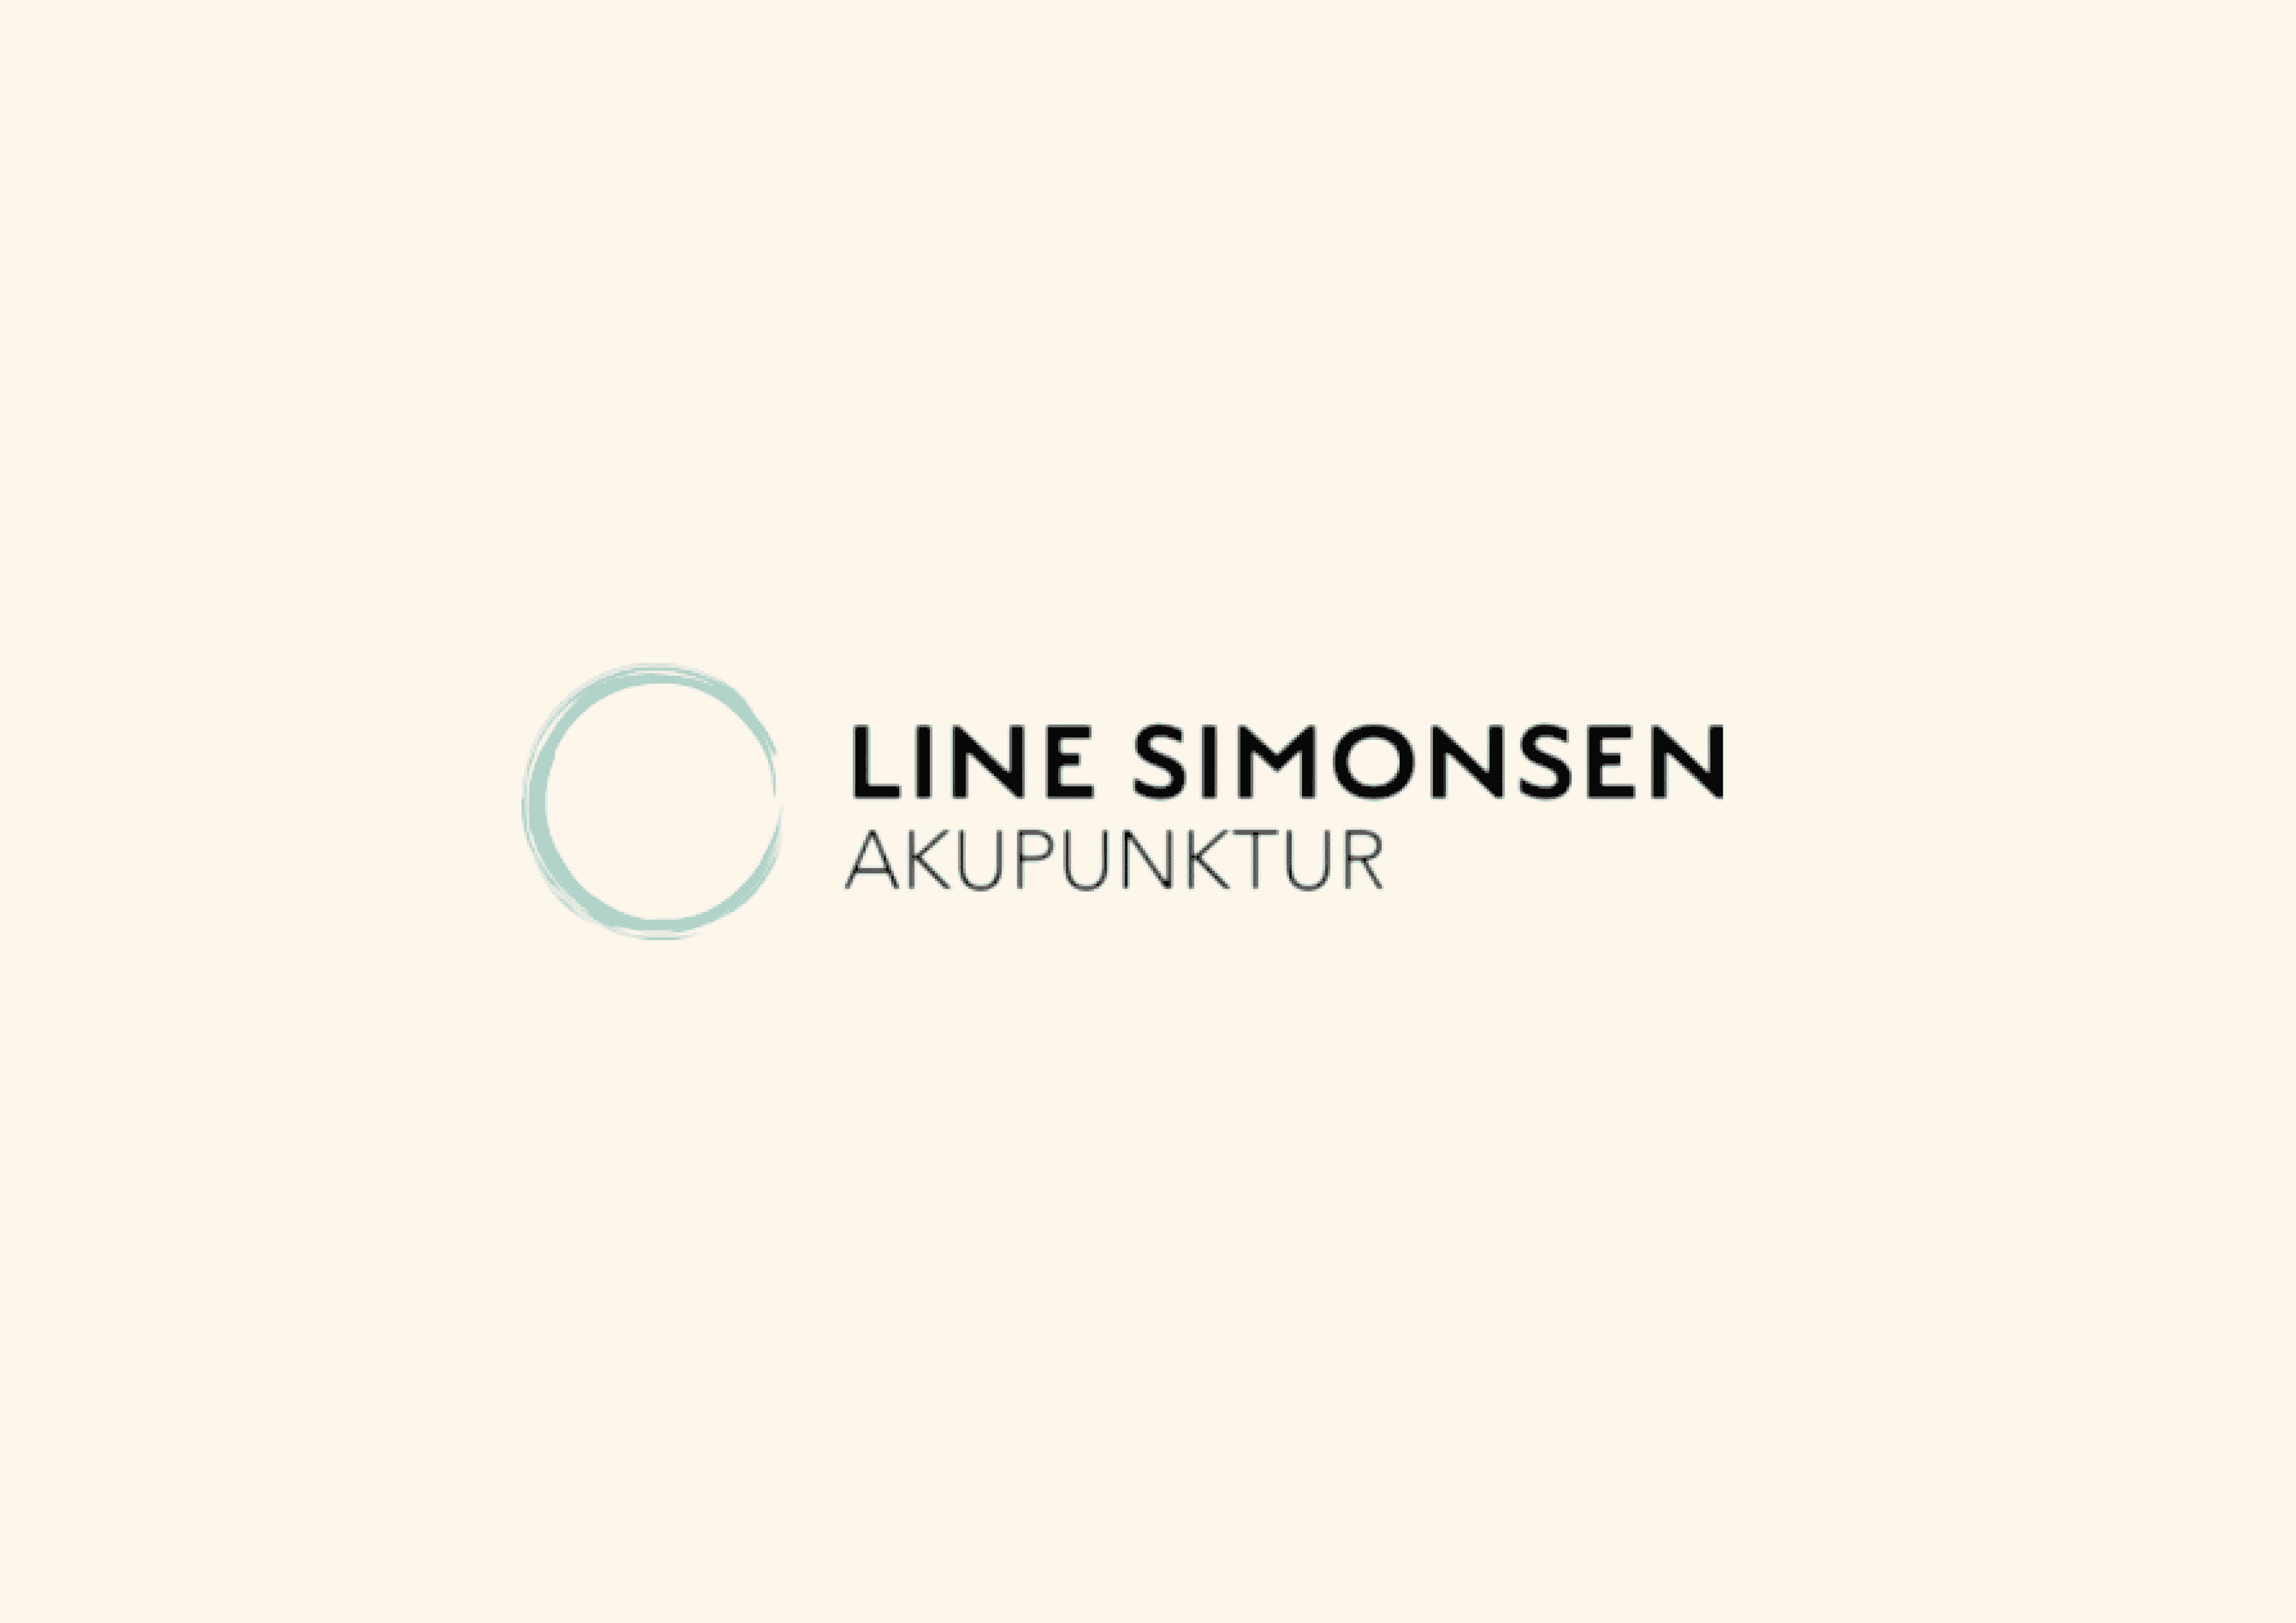 Line Simonsen Akupunktur